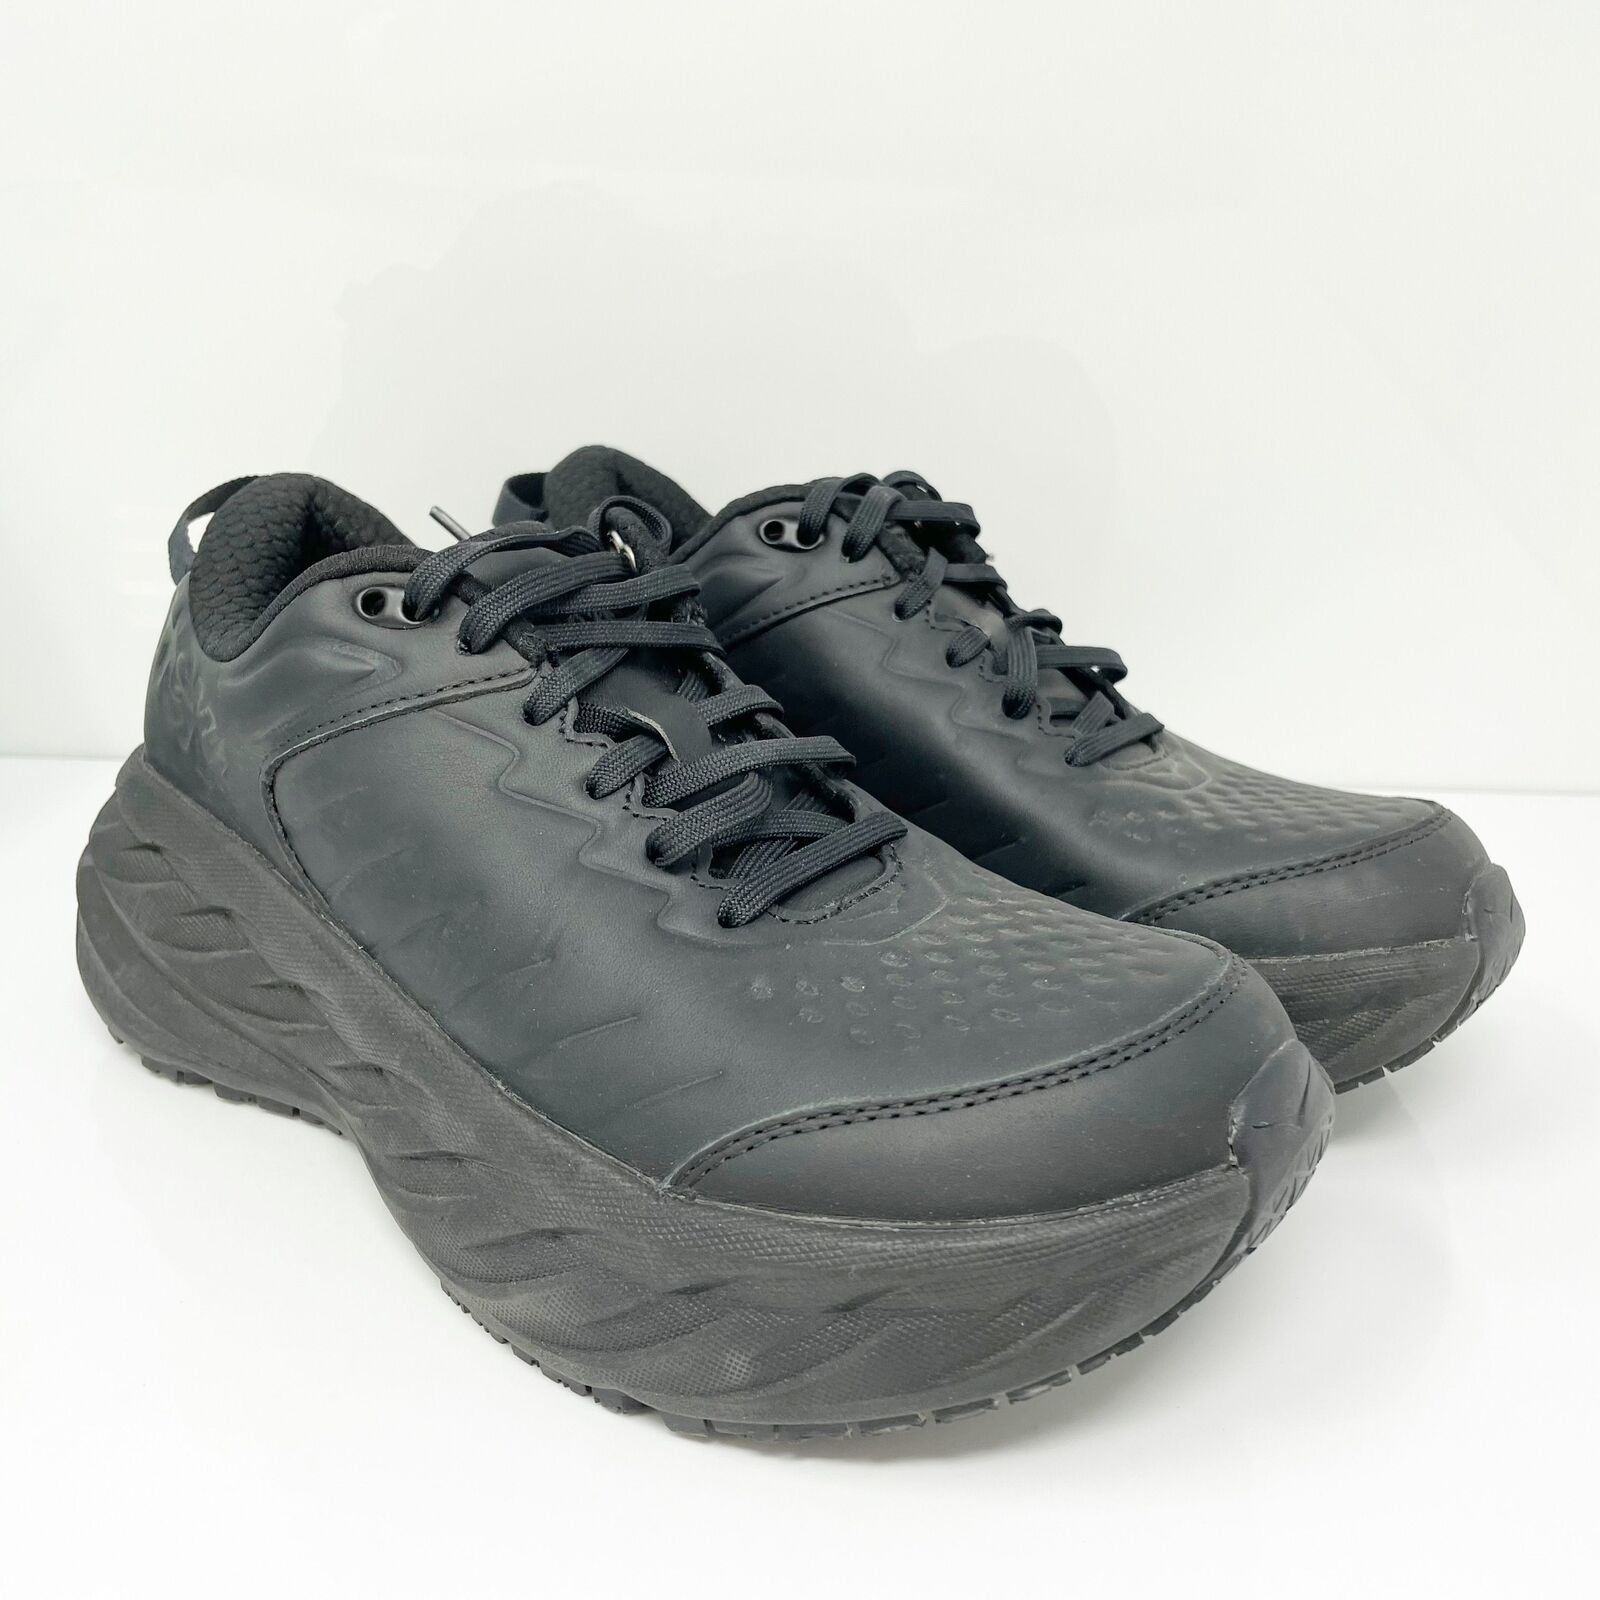 Hoka One One Mens Bondi SR 1110520 BBLC Black Running Shoes Sneakers Size 7